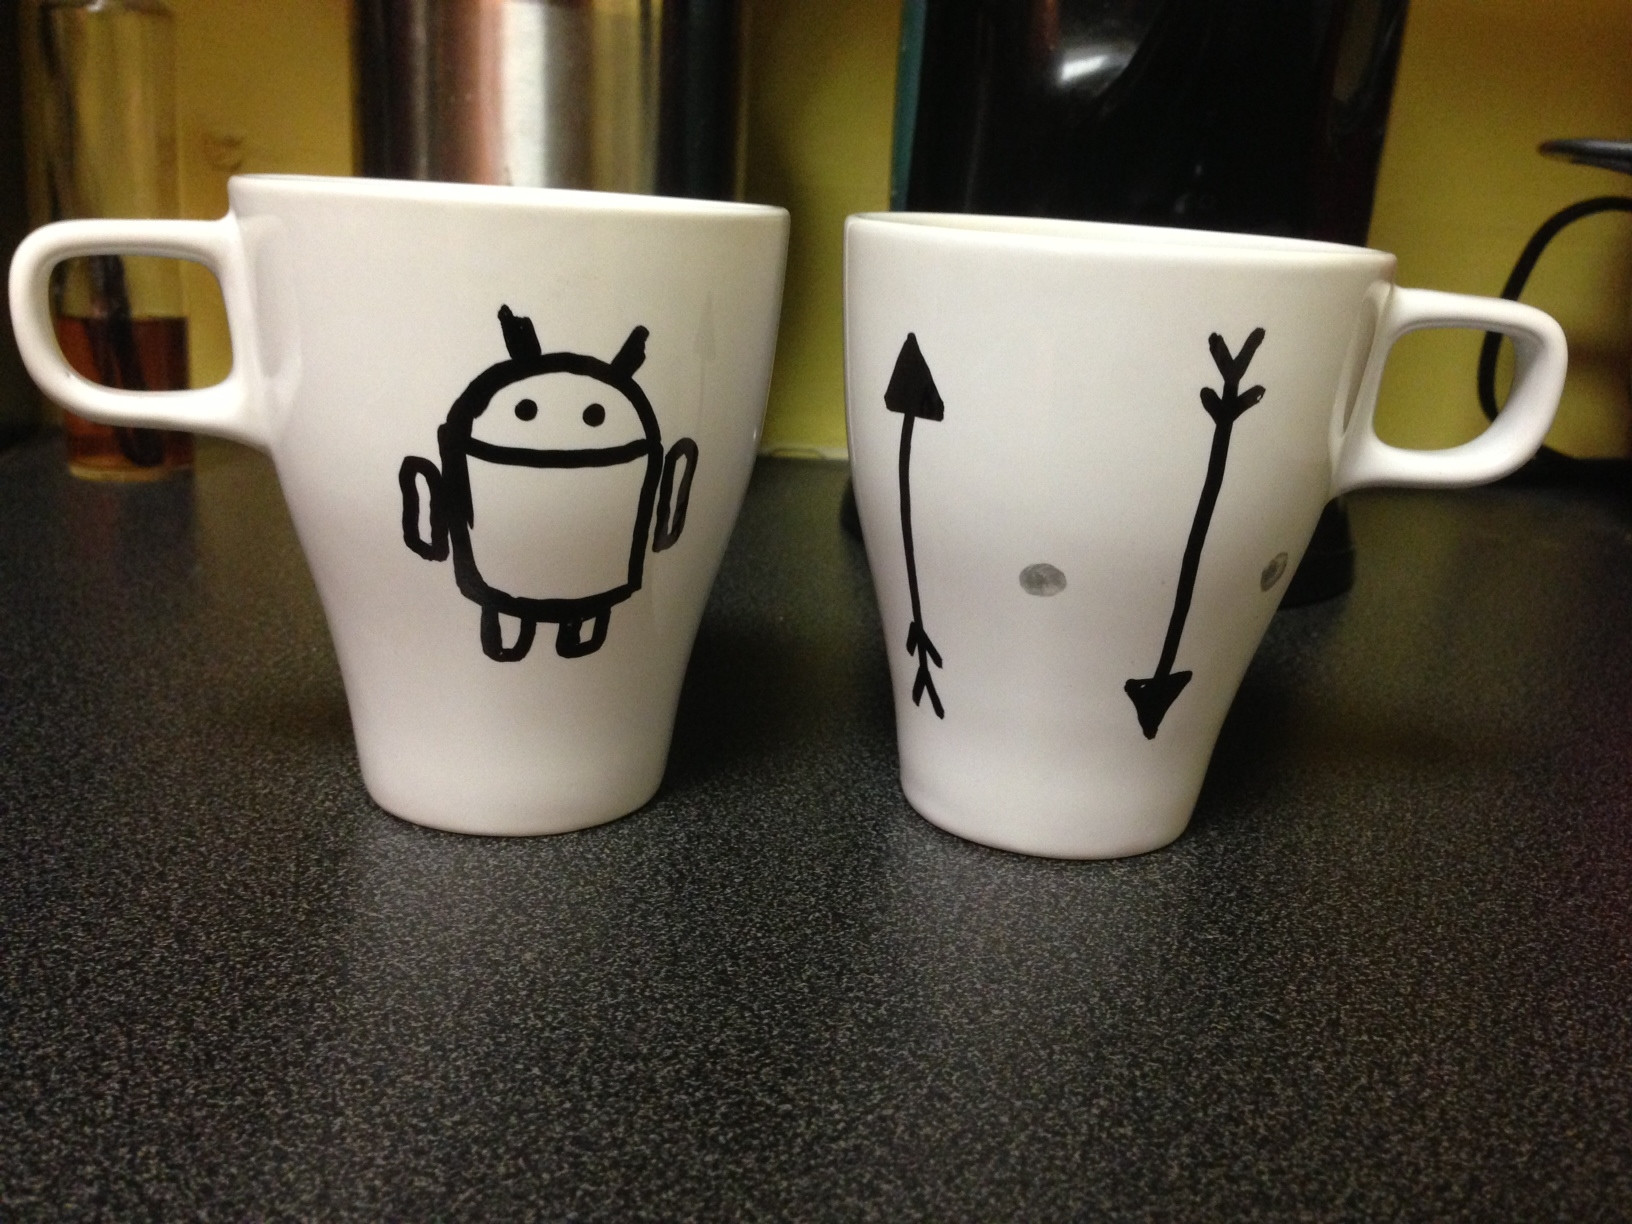 Best ideas about DIY Coffee Mug
. Save or Pin DIY Coffee or Tea… or Hot Chocolate Mugs Now.